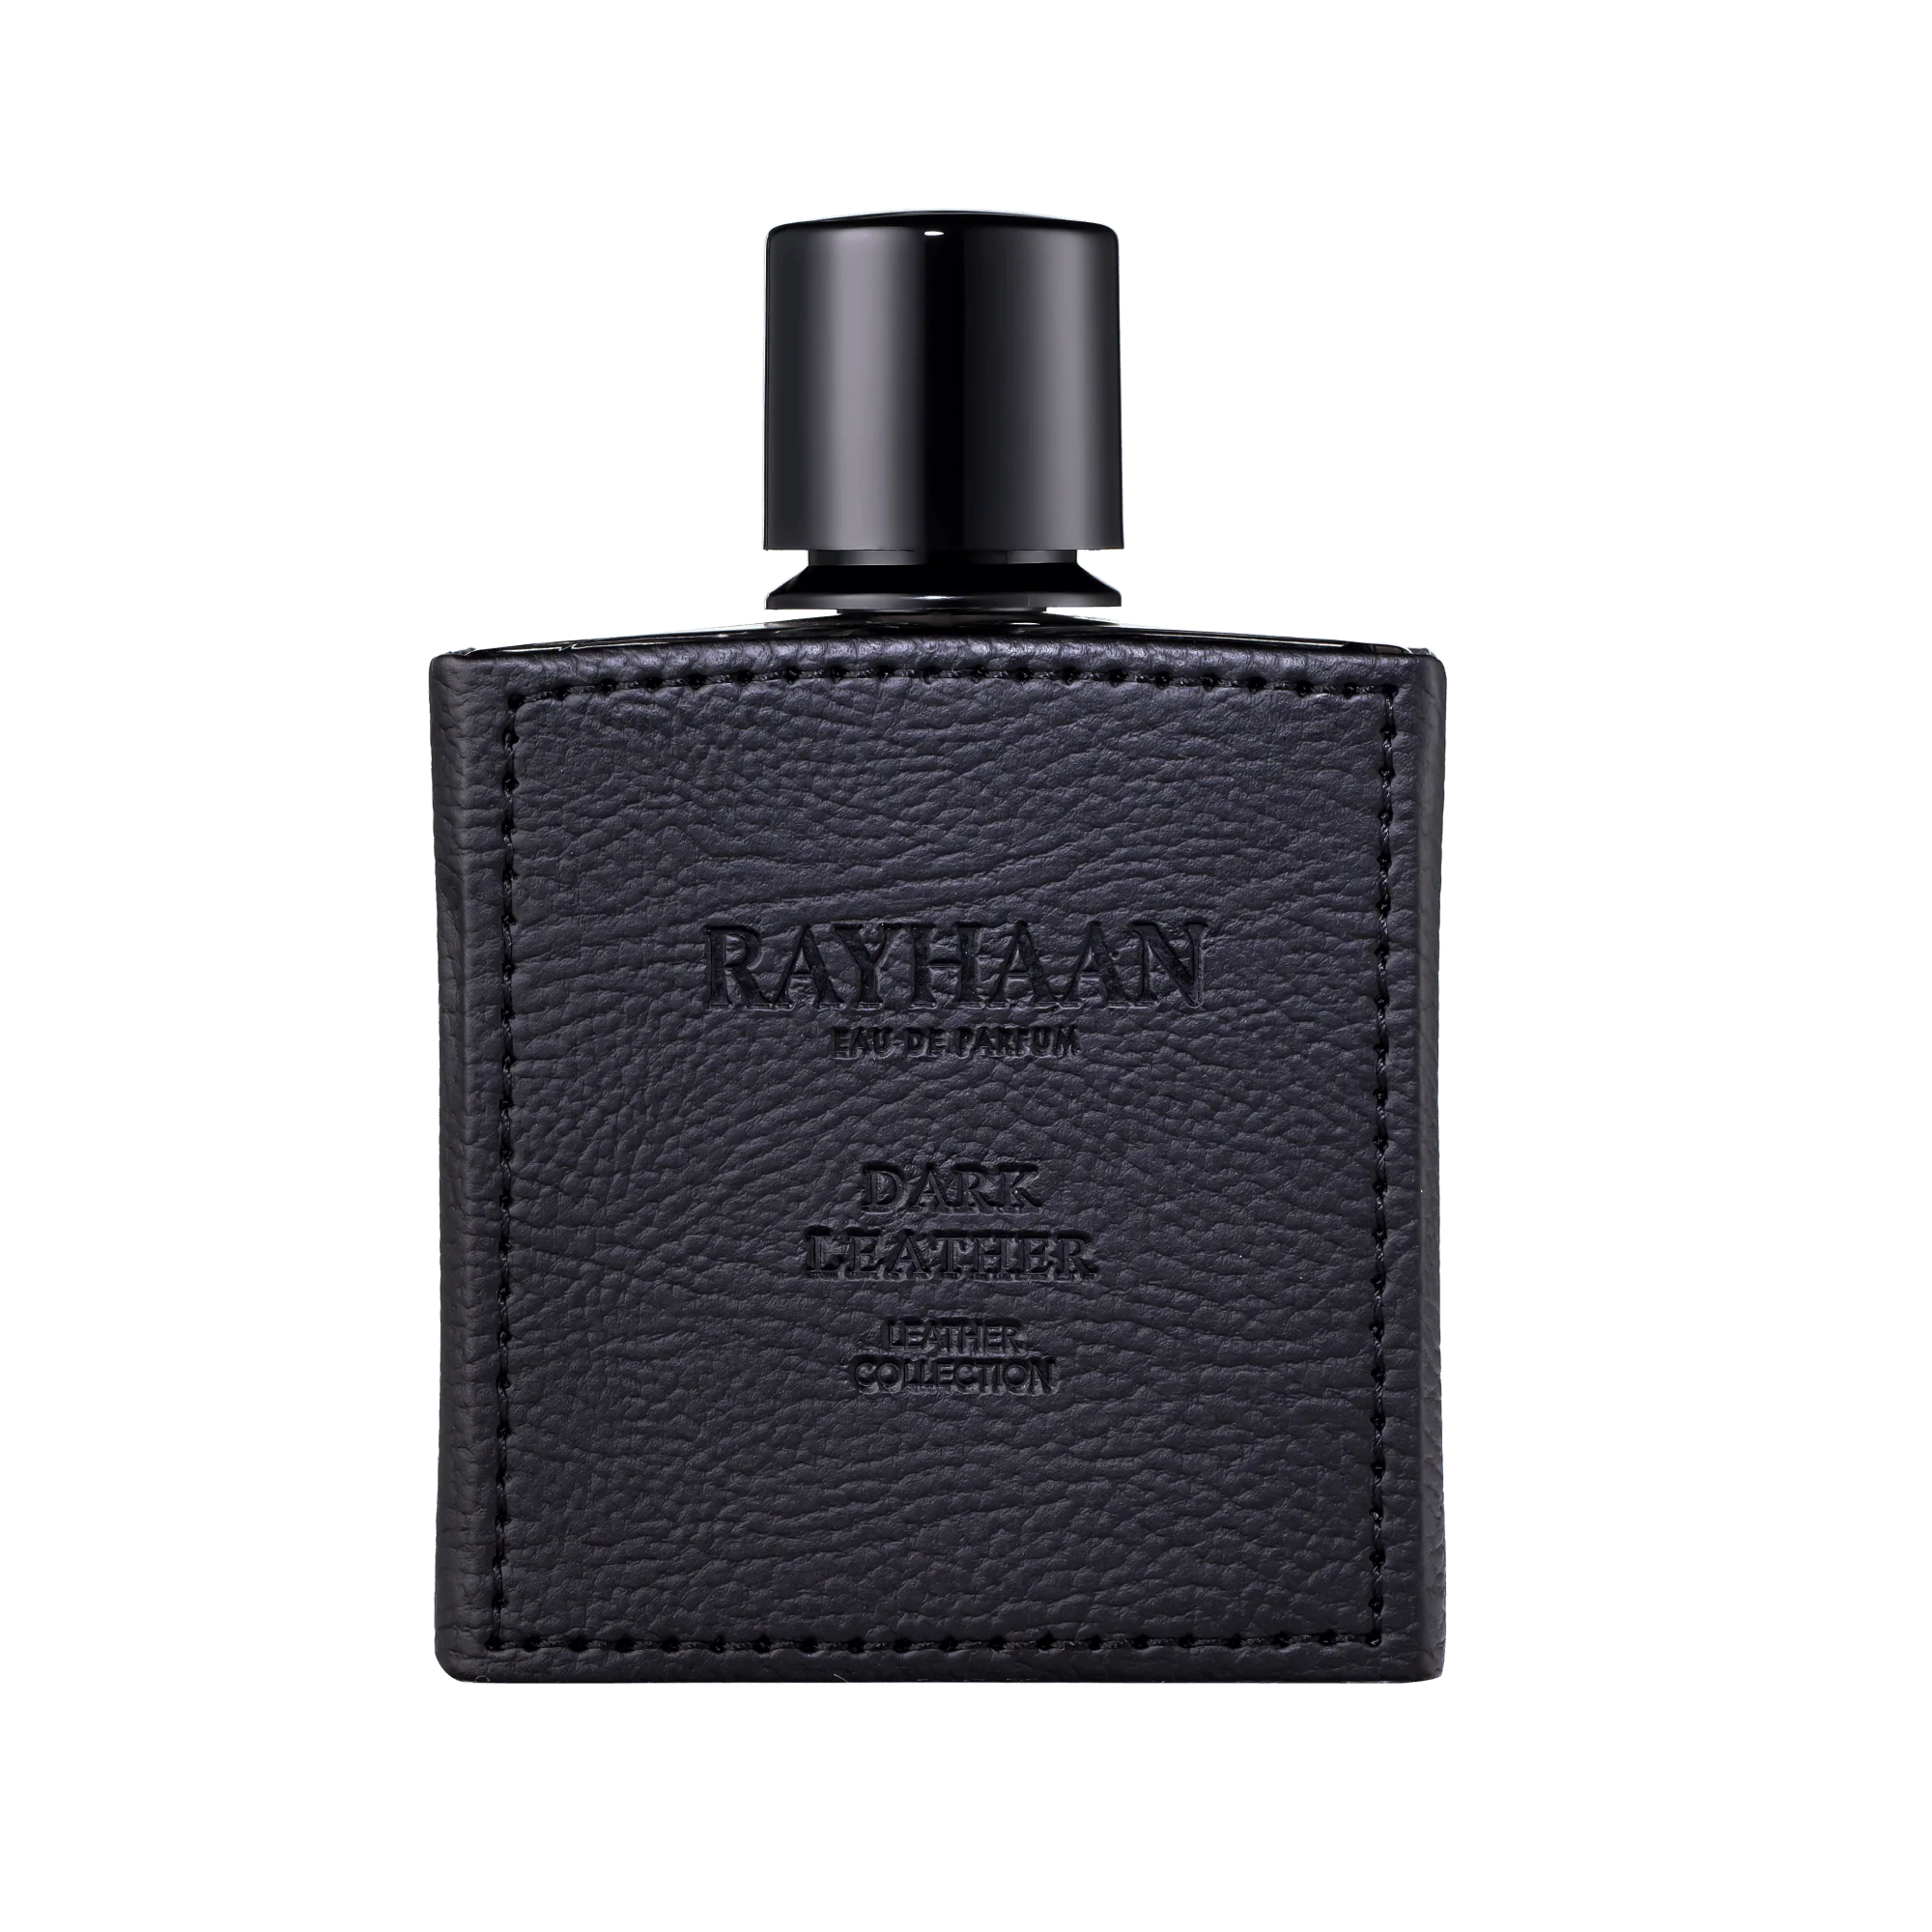 DARK LEATHER - Rayhaan Perfumes